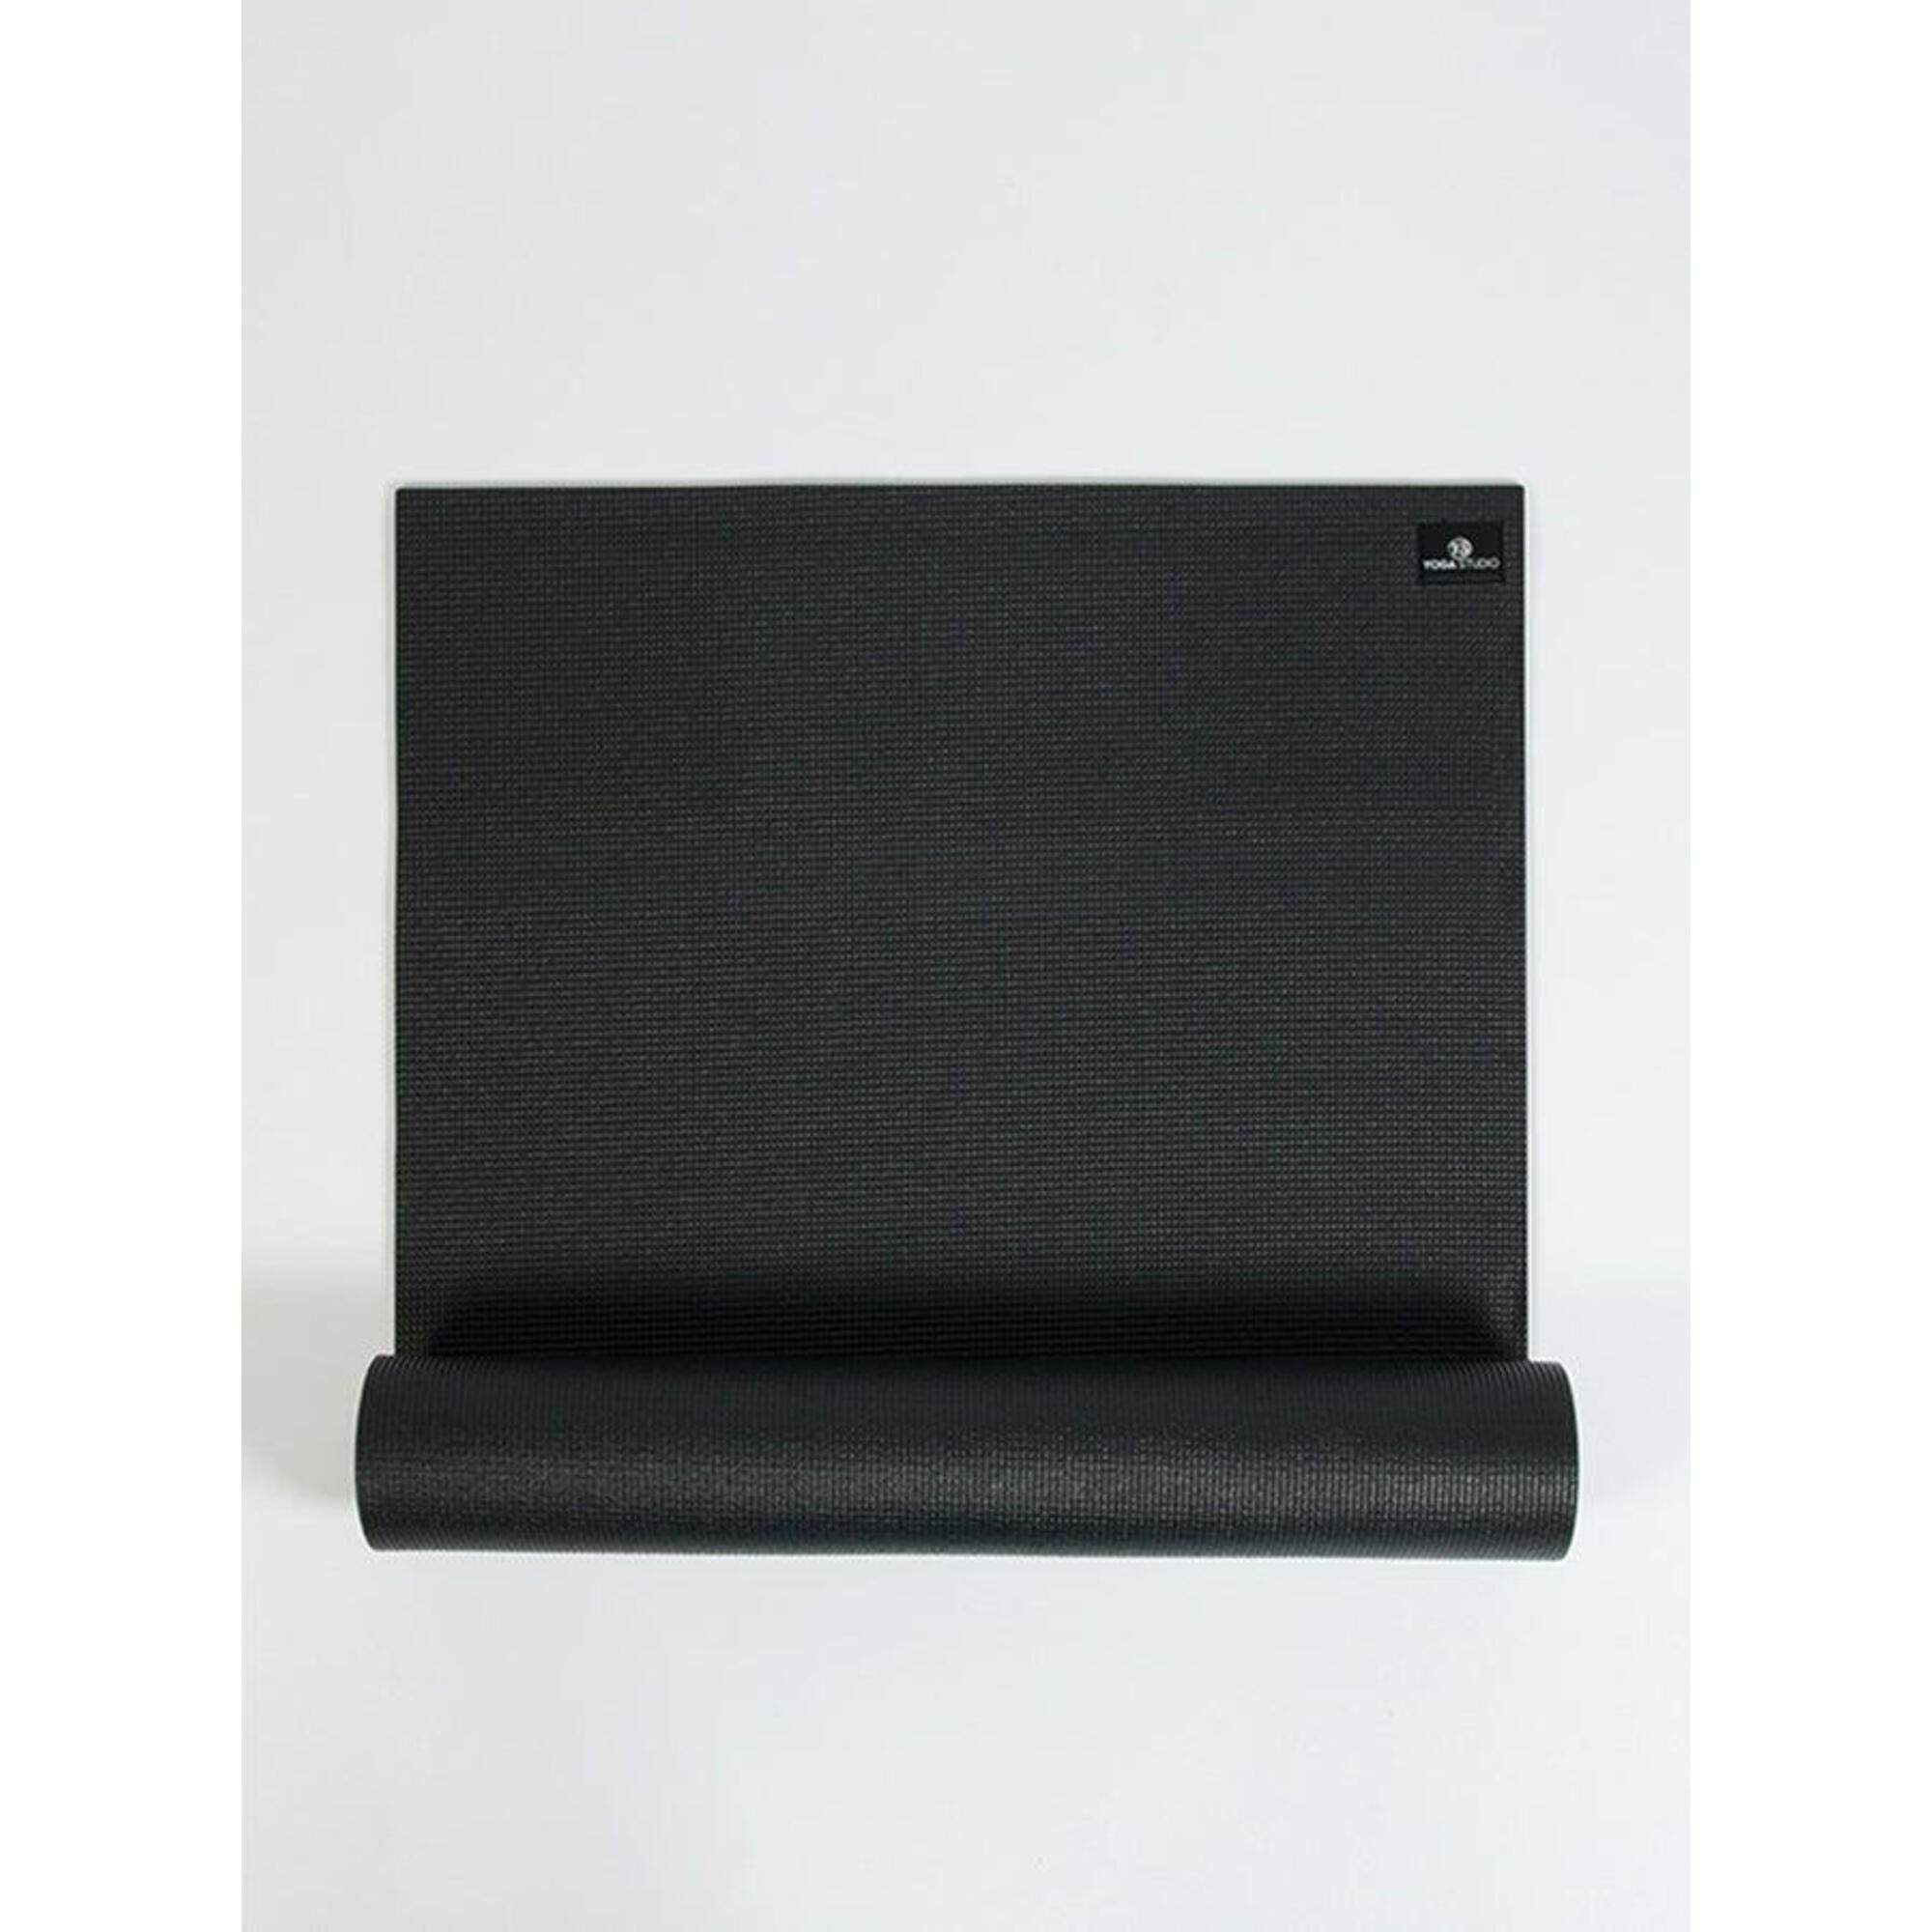 The Yoga Studio Sticky Yoga Mat 6mm - Black 1/4